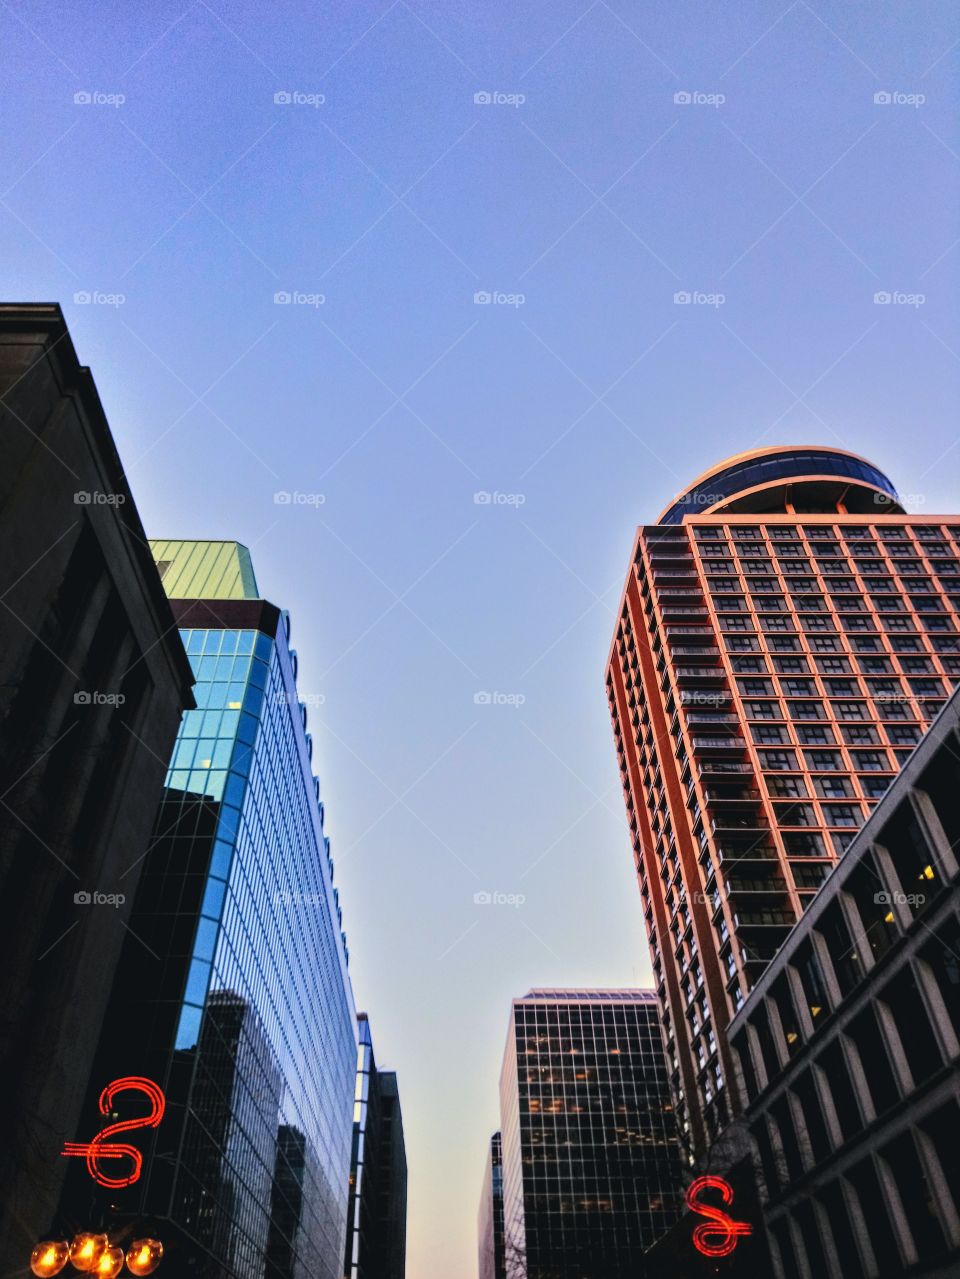 The stunning skyscrapers of Ottawa